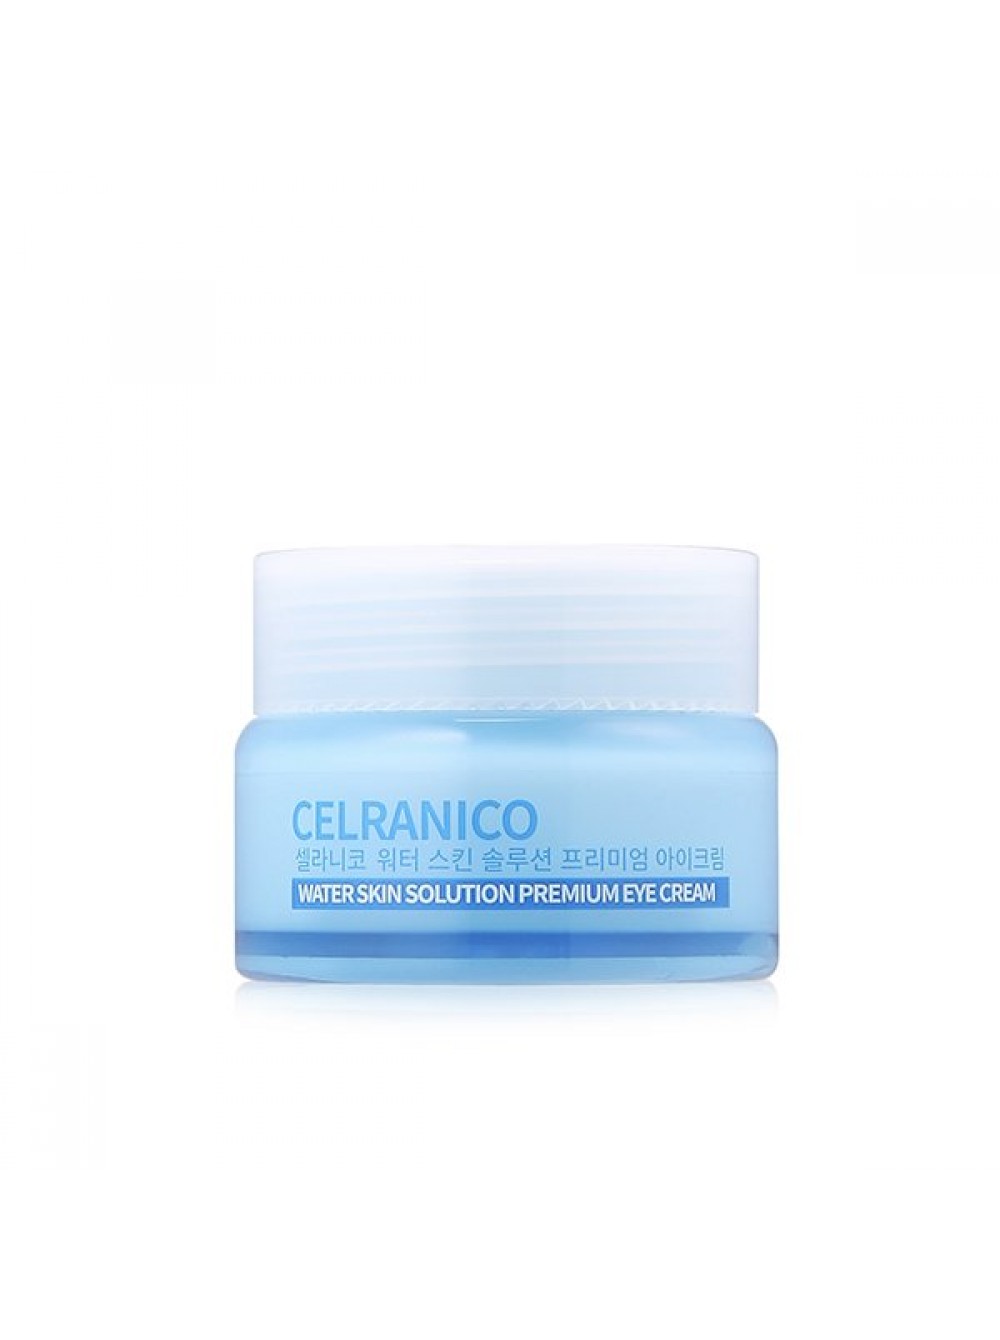 Skin solution ccc. Celranico. Celranico интенсивно увлажняющий крем для кожи вокруг глаз Deep Moisturizing Aqua Eye Cream. Celranico Silky Soft spicule Cream. Крем Moisturizing Cream Корея вокруг глаз отзывы.